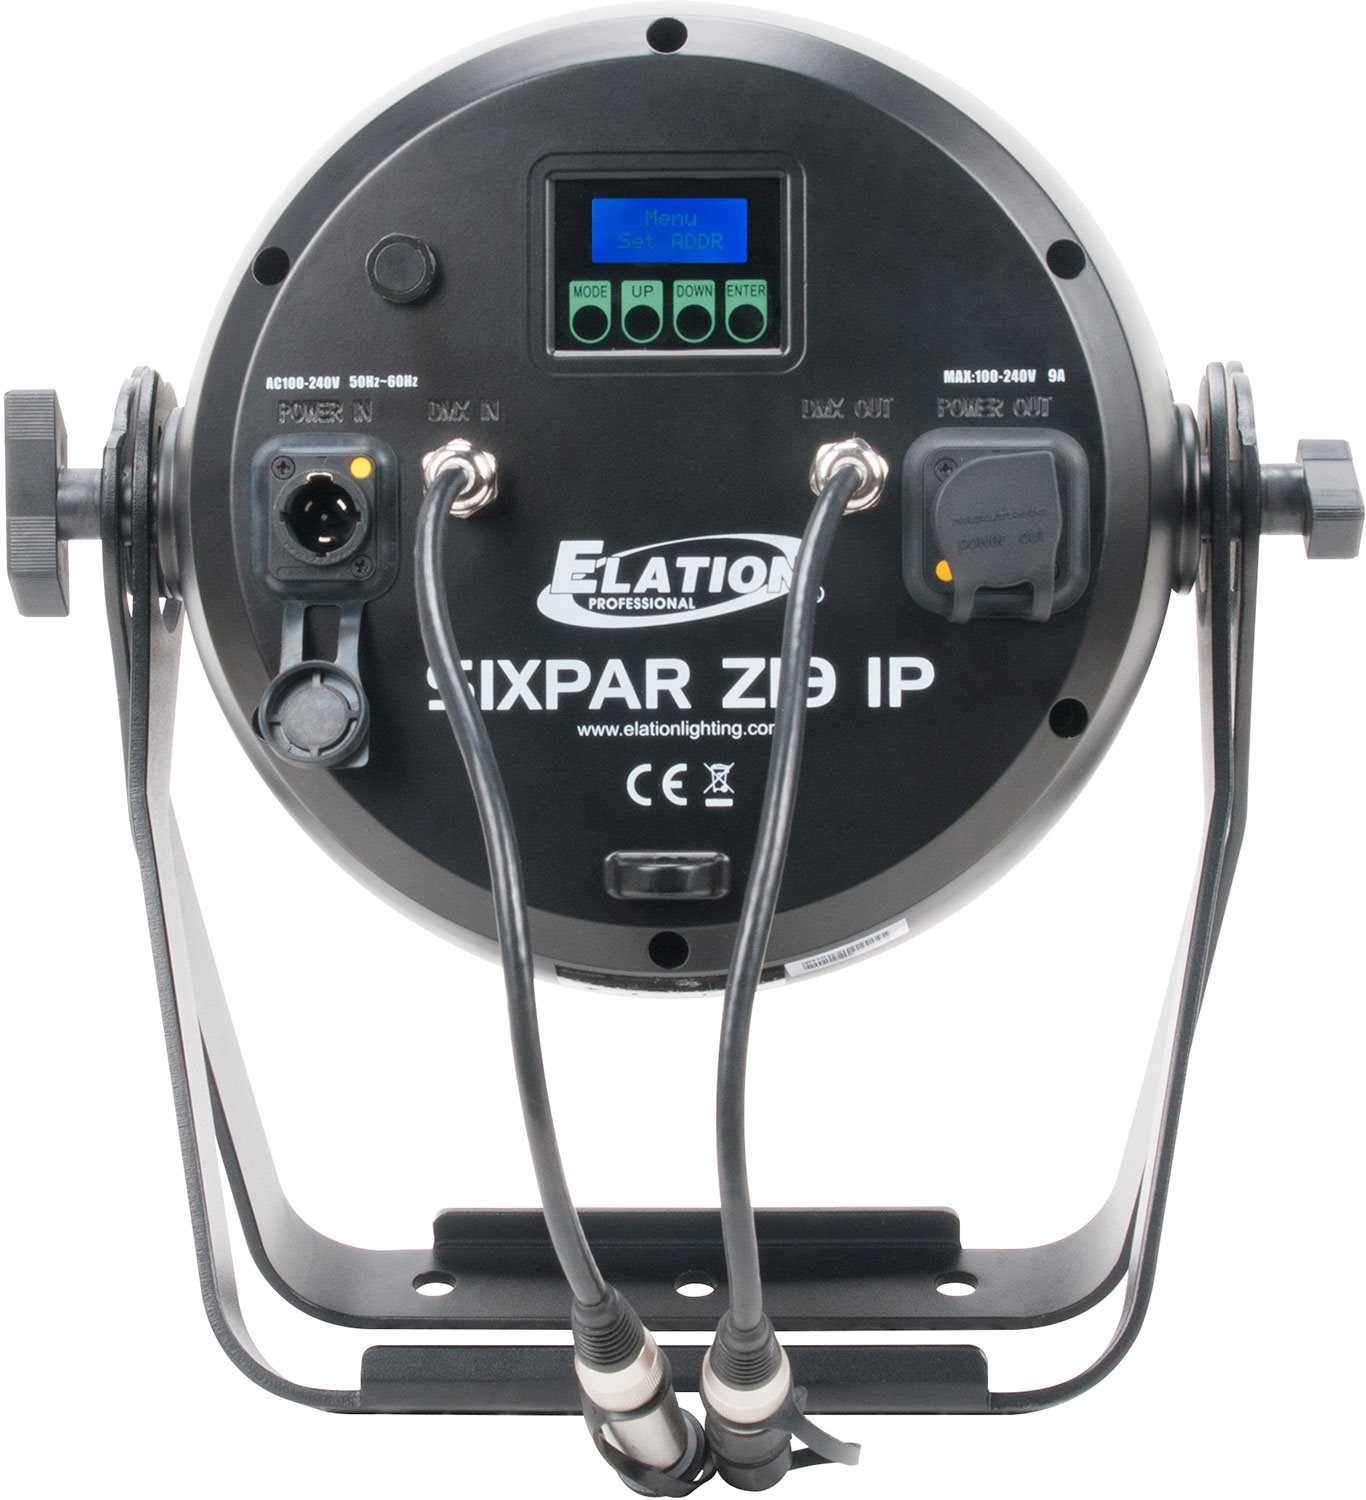 Elation SIXPAR Z19 IP 19x15-Watt RGBWA Plus UV LED Wash Light - PSSL ProSound and Stage Lighting